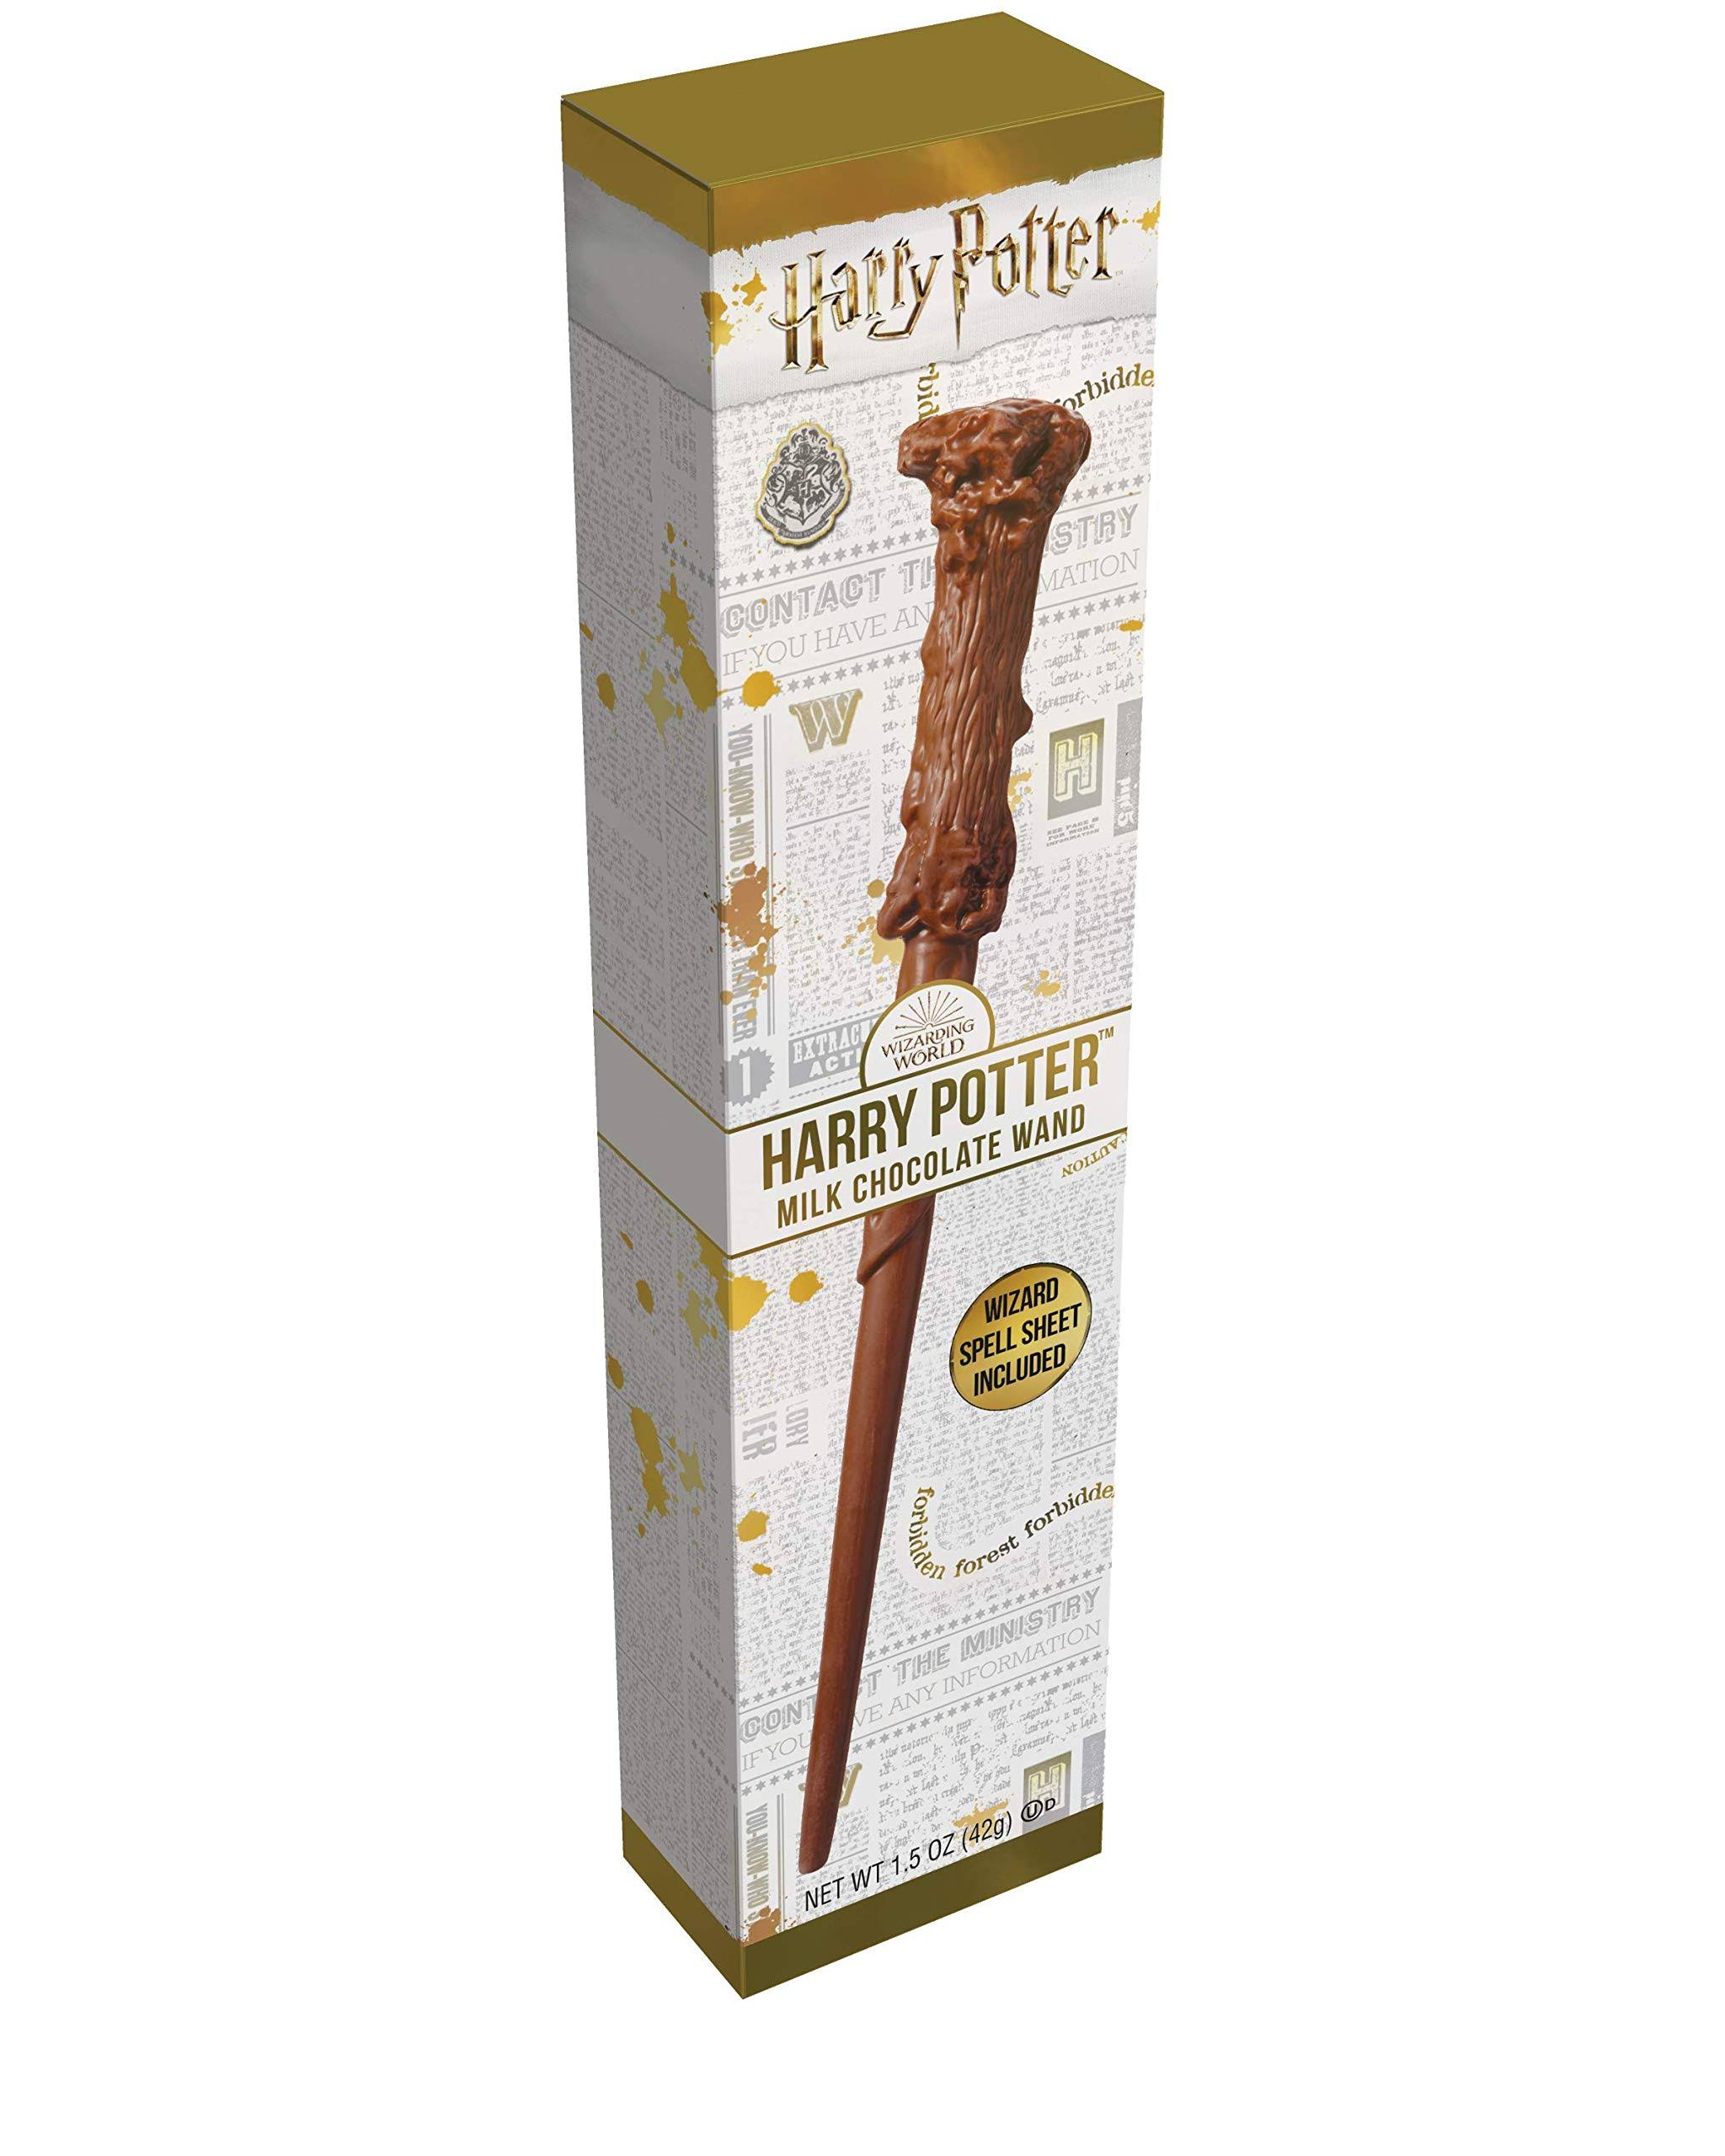 Harry Potter Milk Chocolate Wands